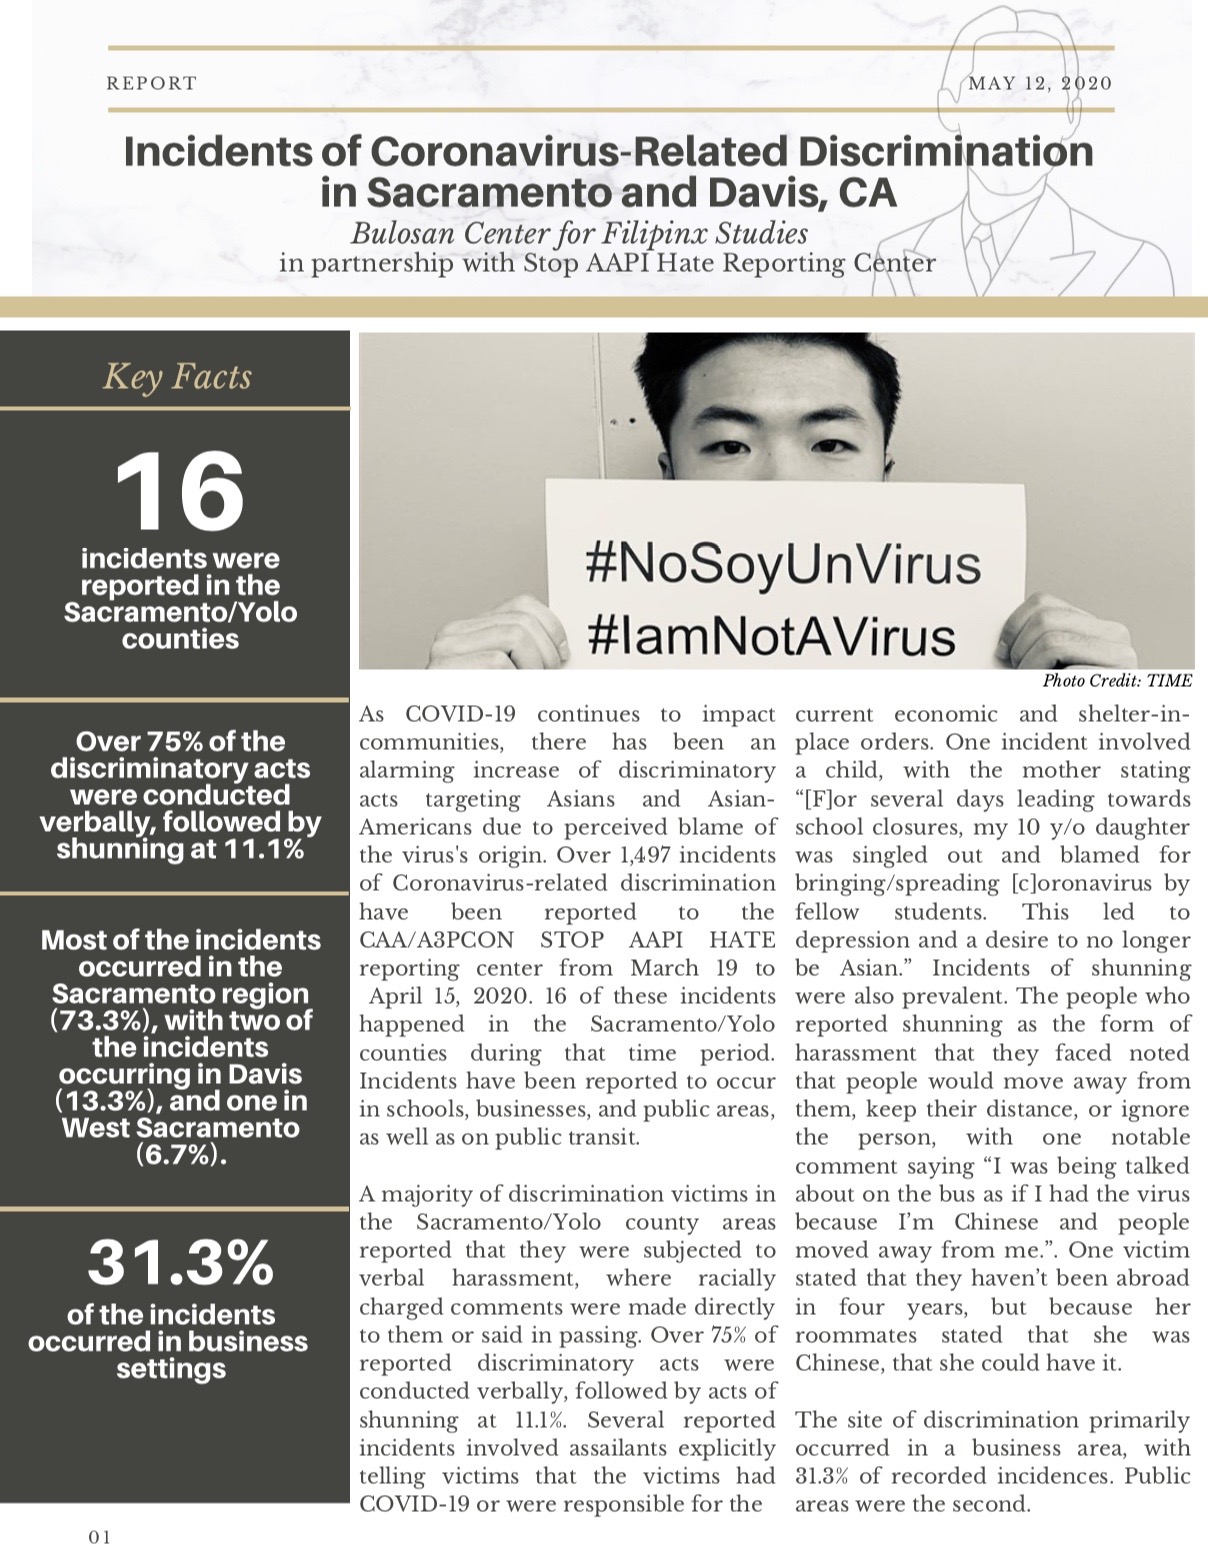 Report: Incidents of Coronavirus-Related Discrimination in Sacramento and Davis, CA